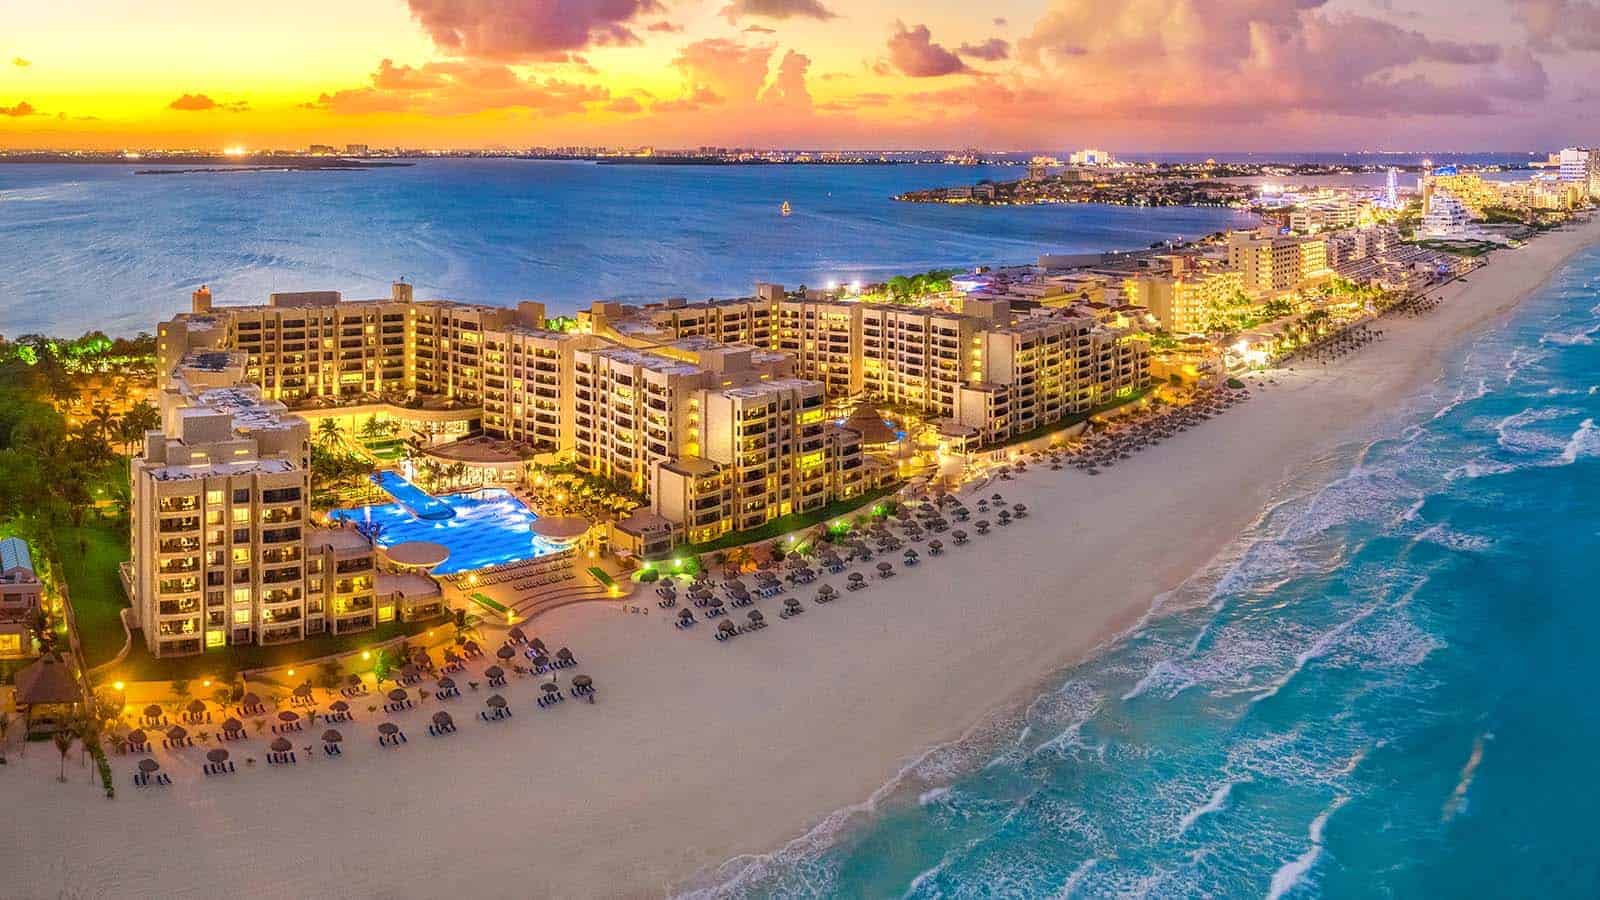 Cancun, Mexico - Travel Advisory